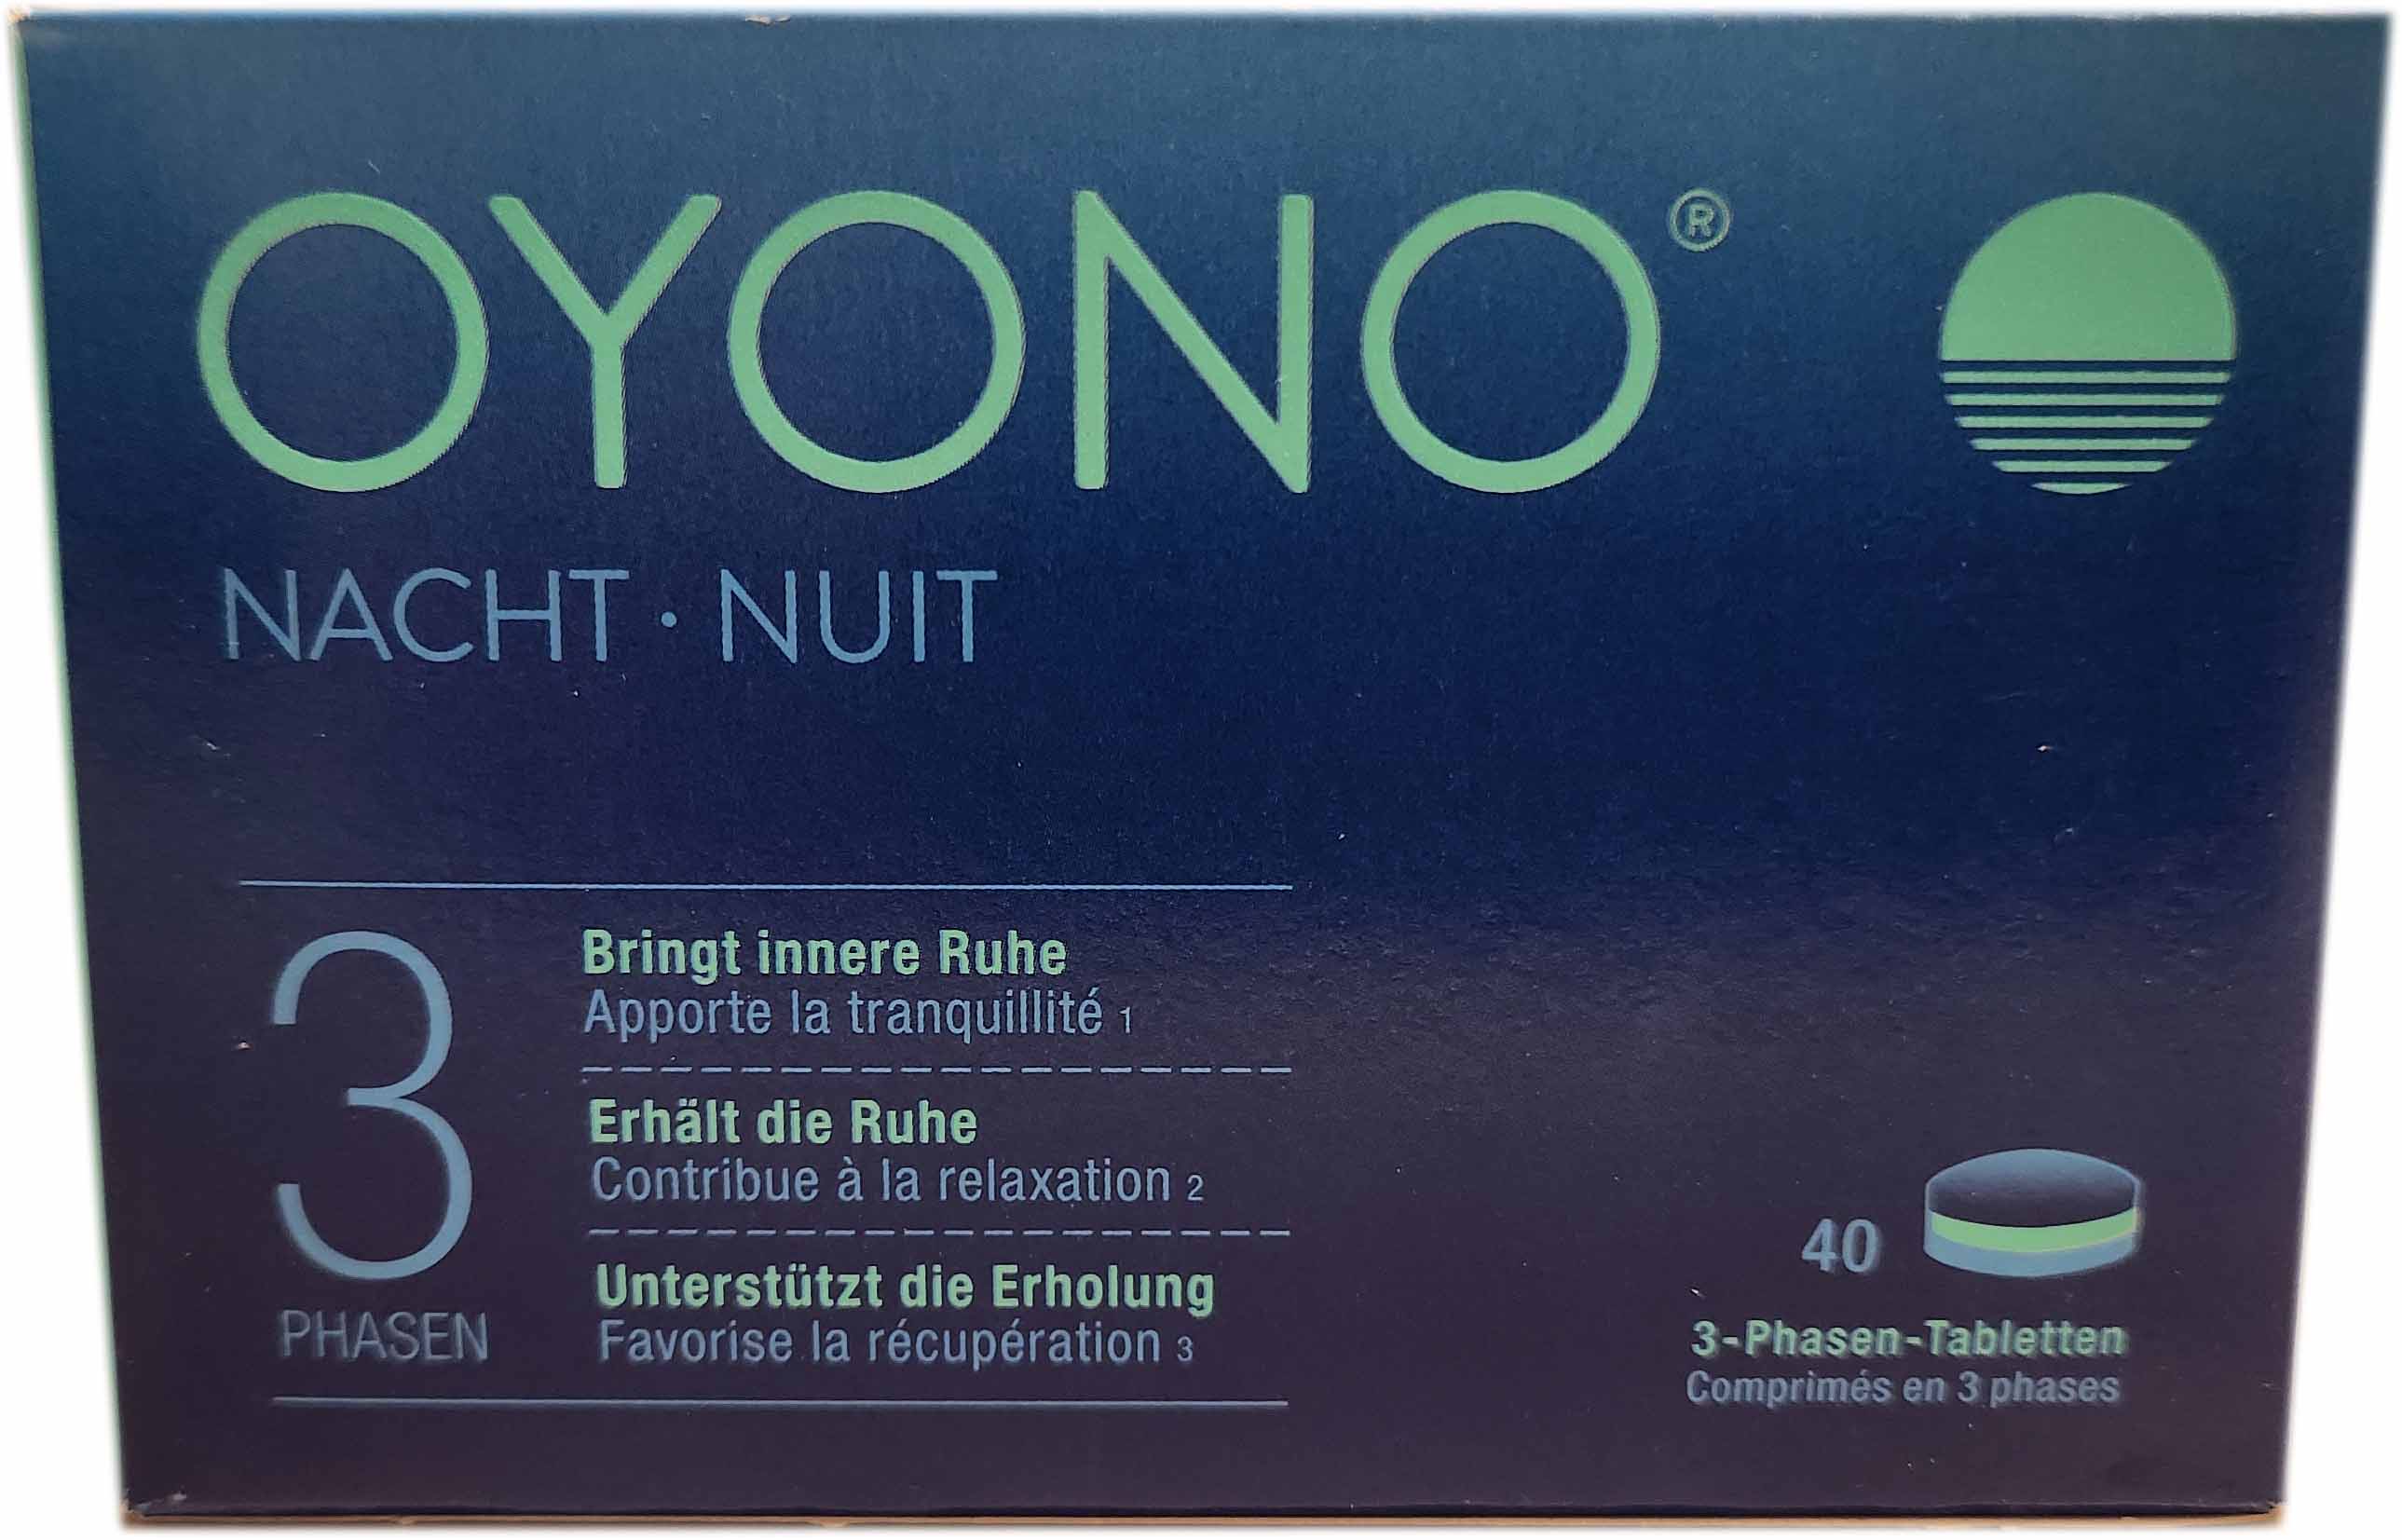 OYONO Nacht 3 - Phasen - Tabletten 40 Stk. Kopie